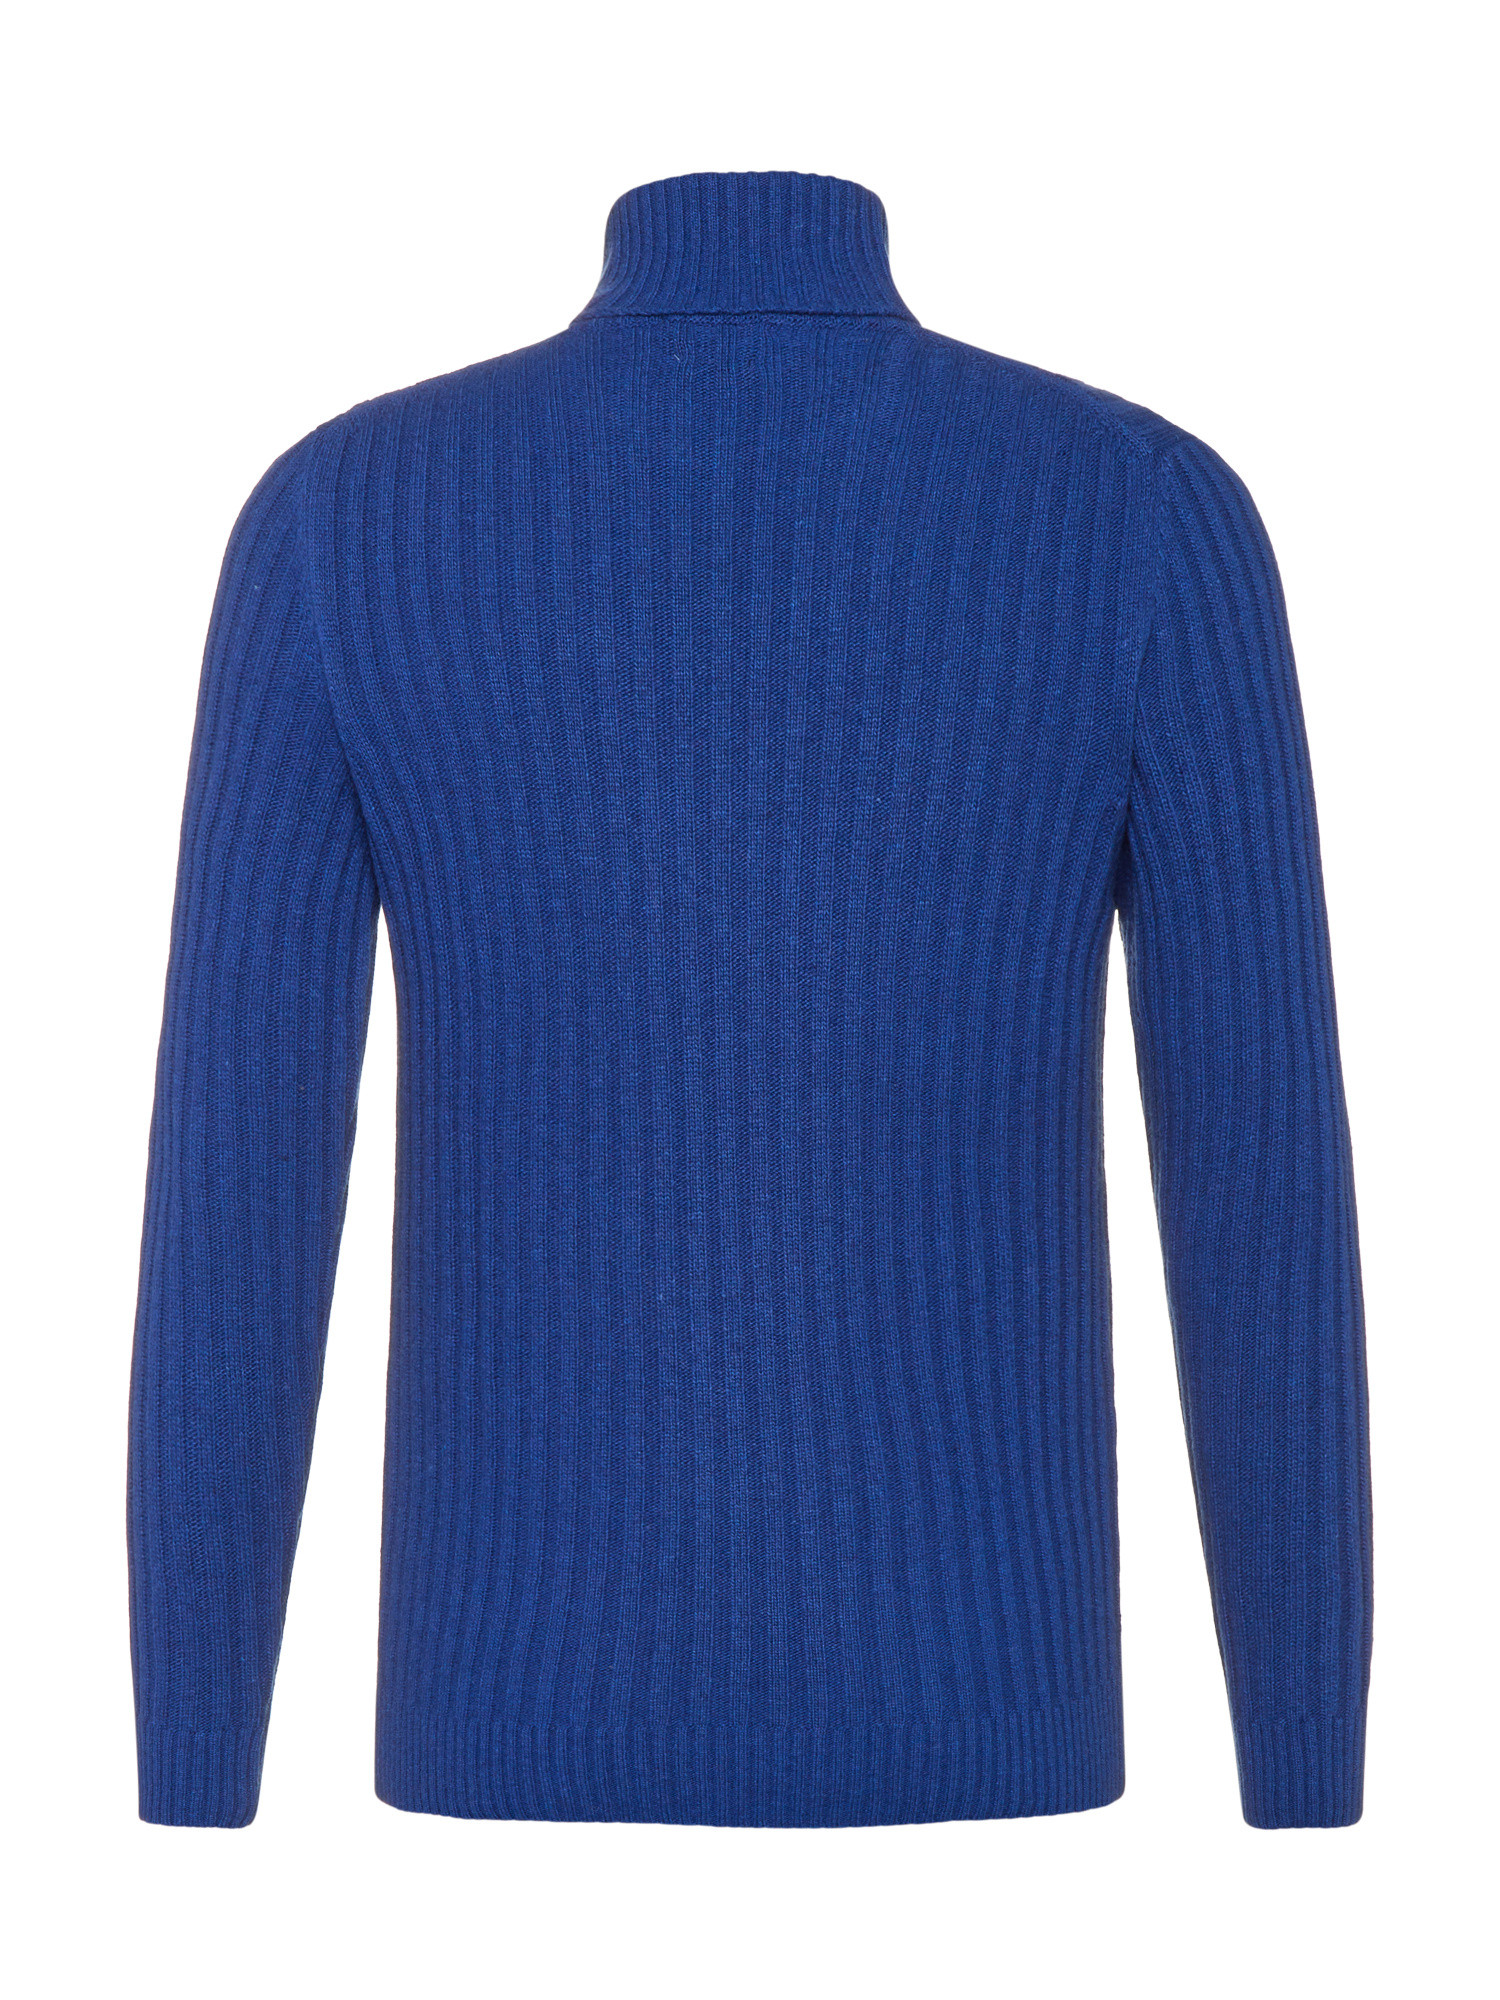 Luca D'Altieri - Cashmere blend and wool turtleneck, Light Blue, large image number 1